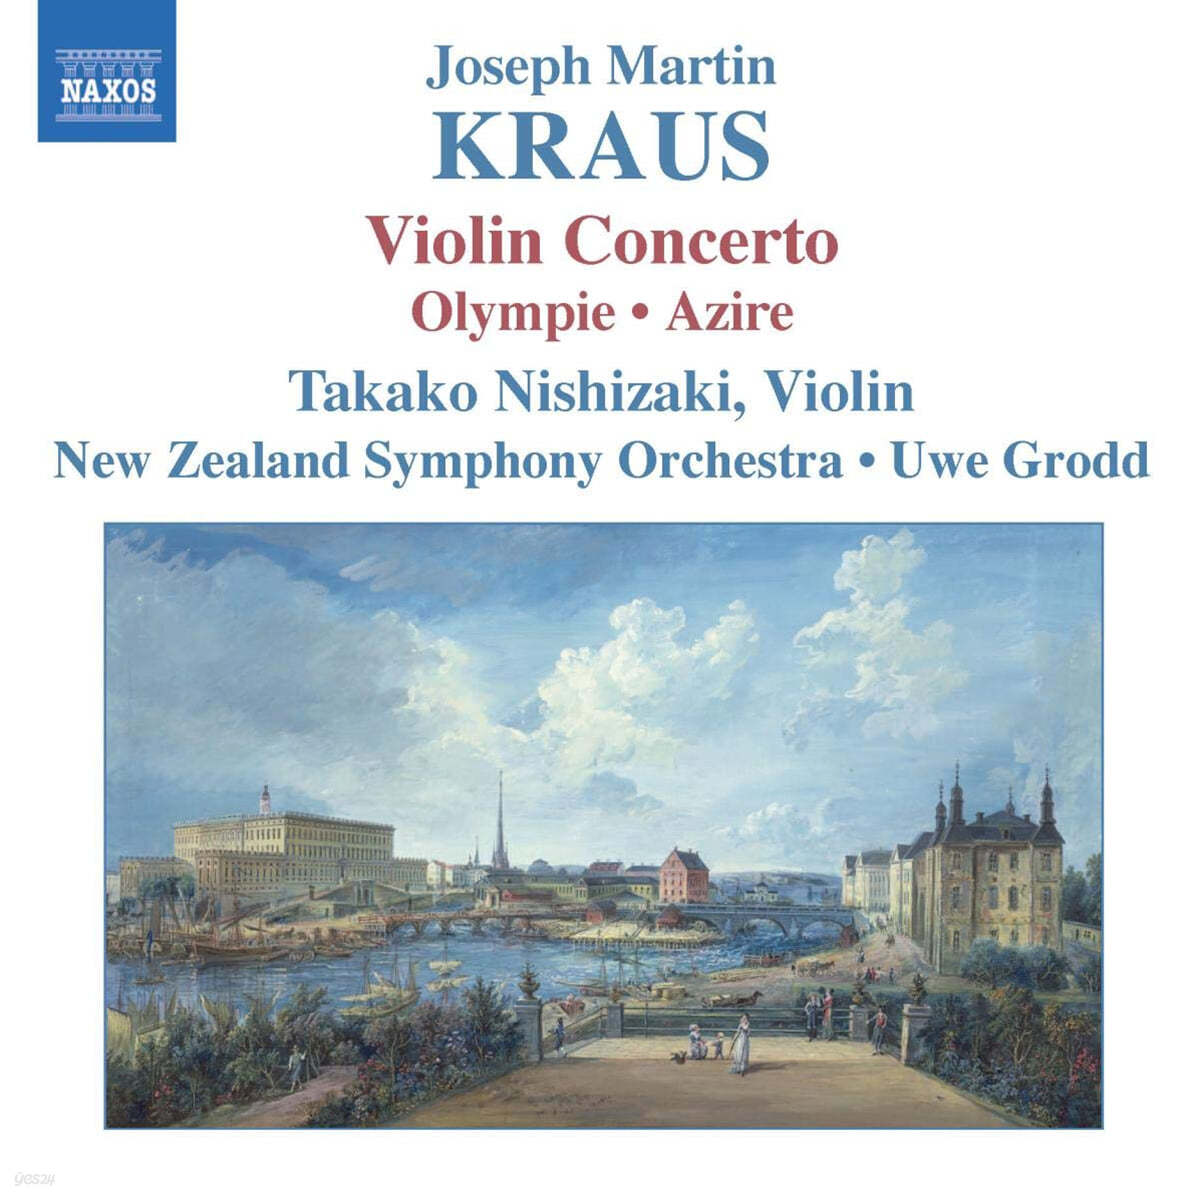 Takako Nishizaki 요셉 마틴 크라우스: 바이올린 협주곡, 올림피에, 아치레 중의 춤곡들 (Joseph Martin Kraus: Violin Concerto, Olympie, Azire) 